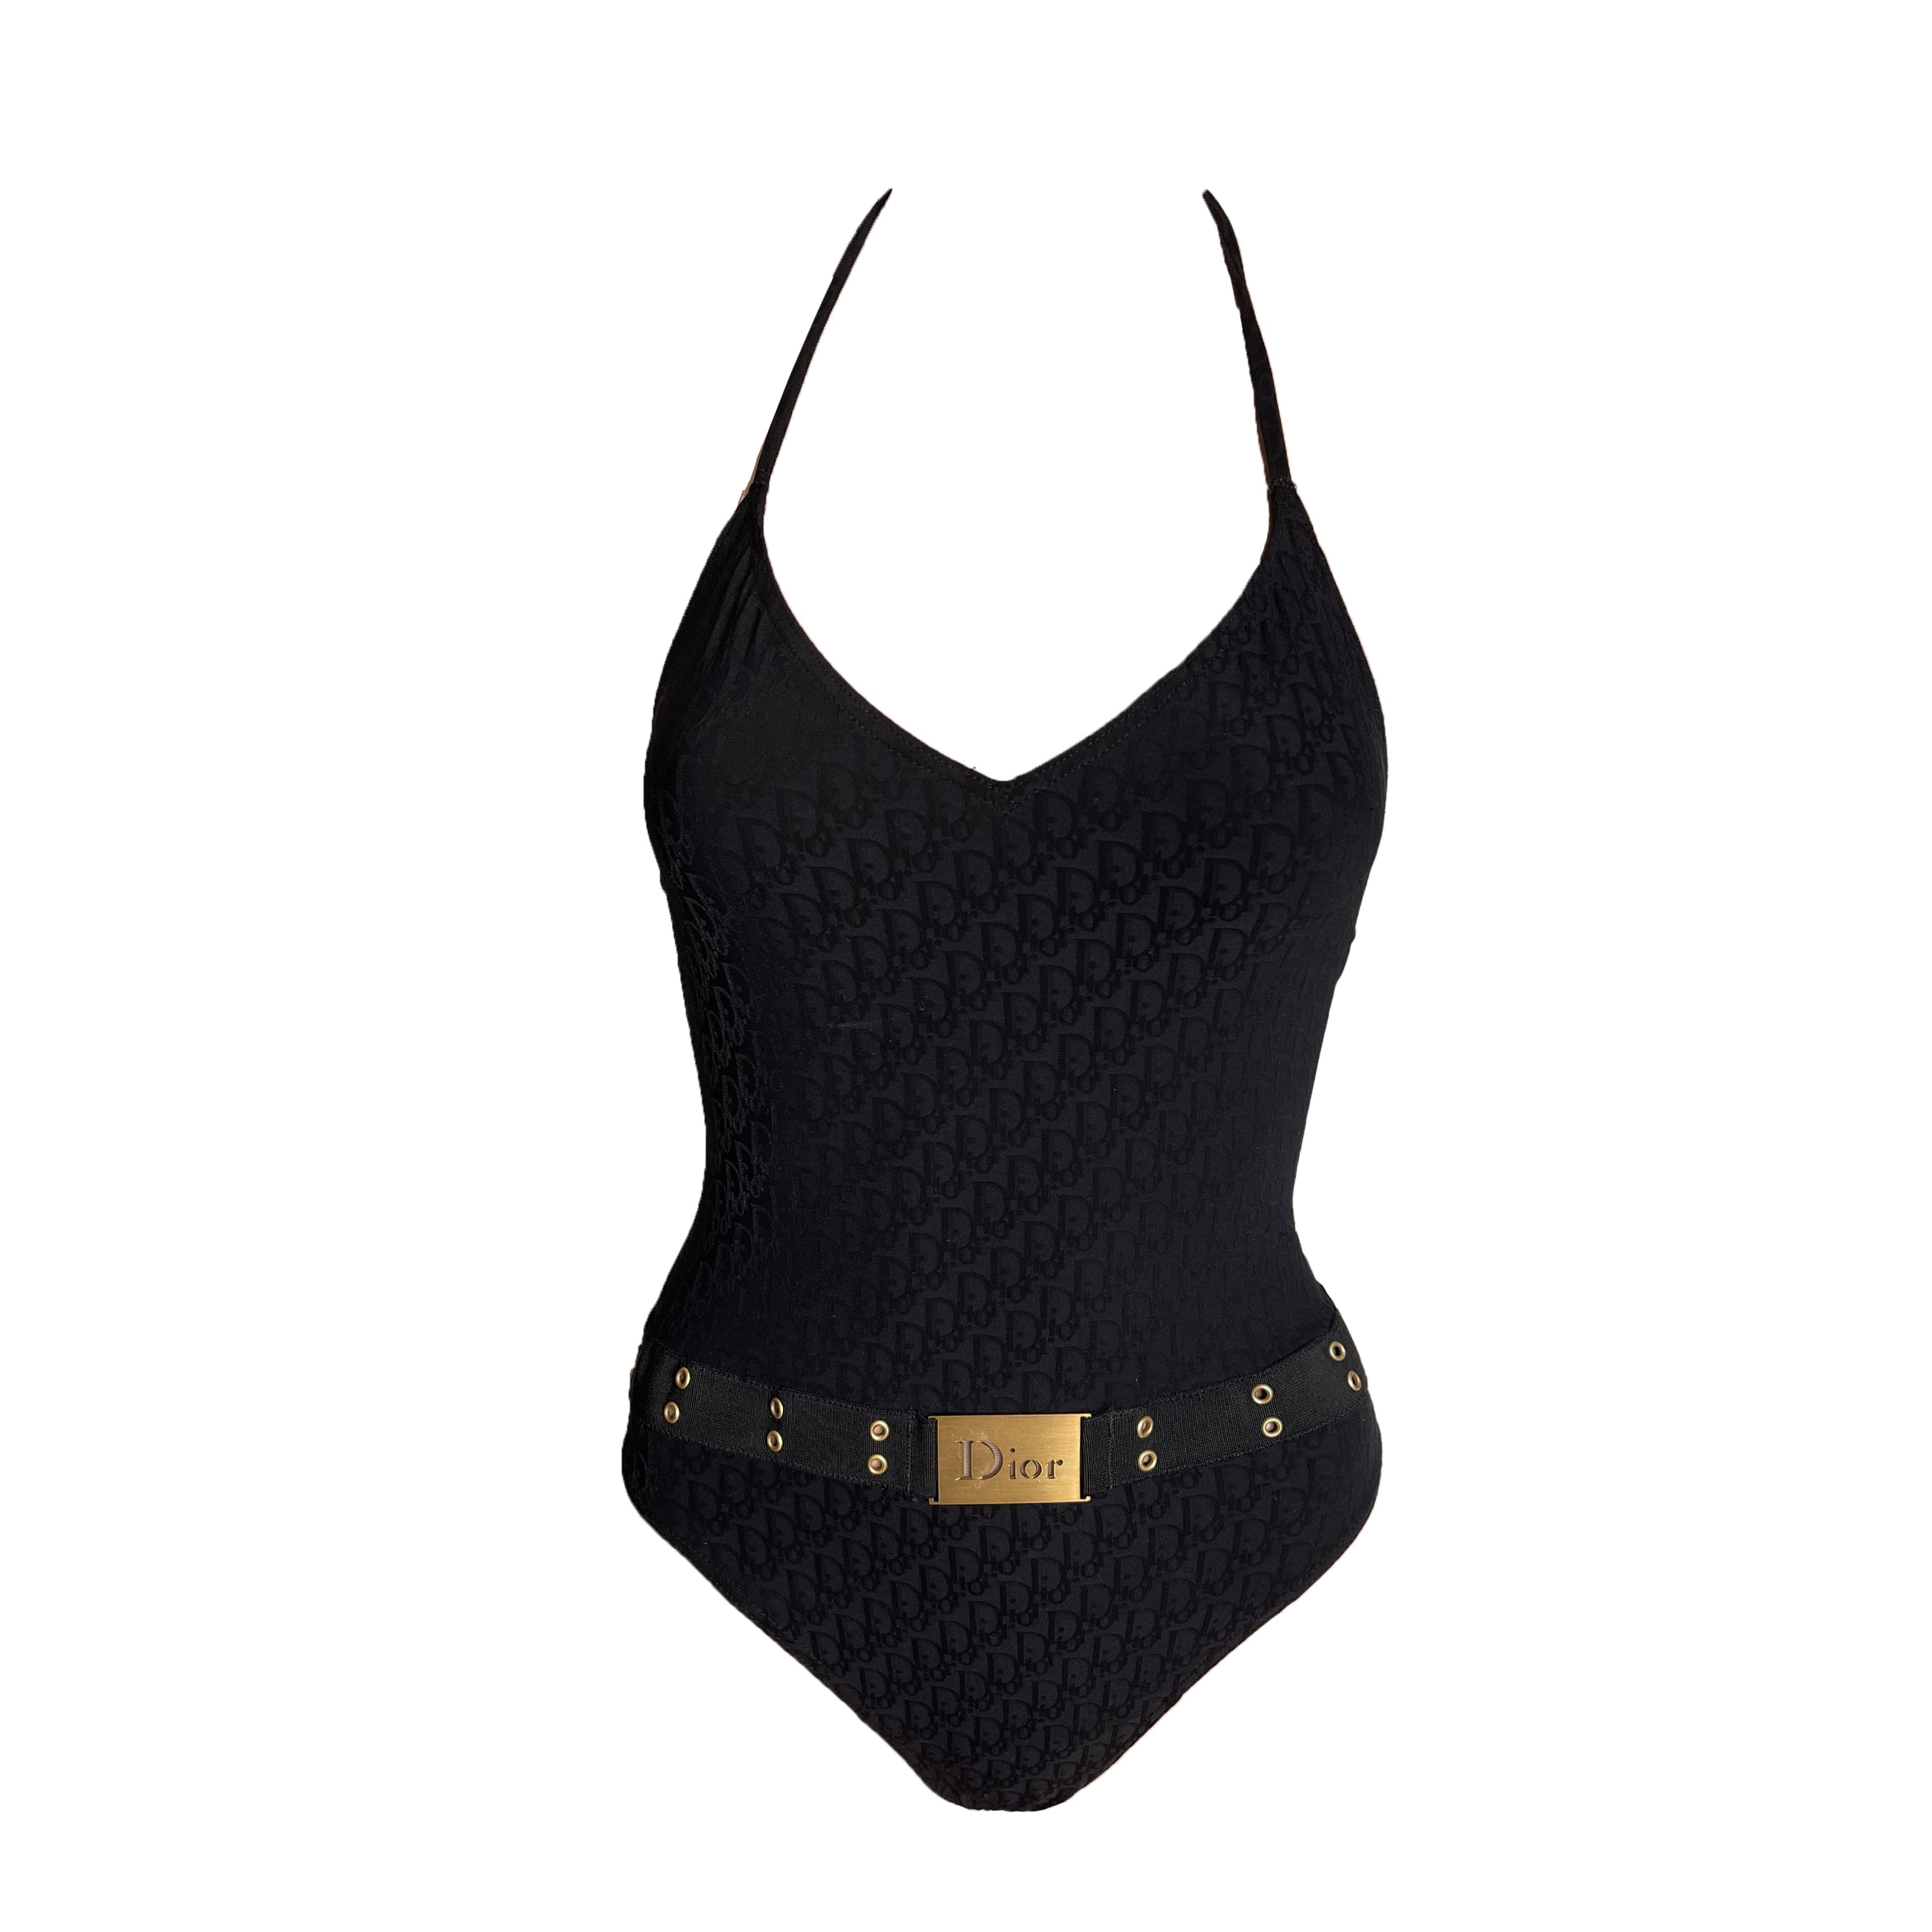 Christian Dior swimsuit bikini in size M monogram Brown Light